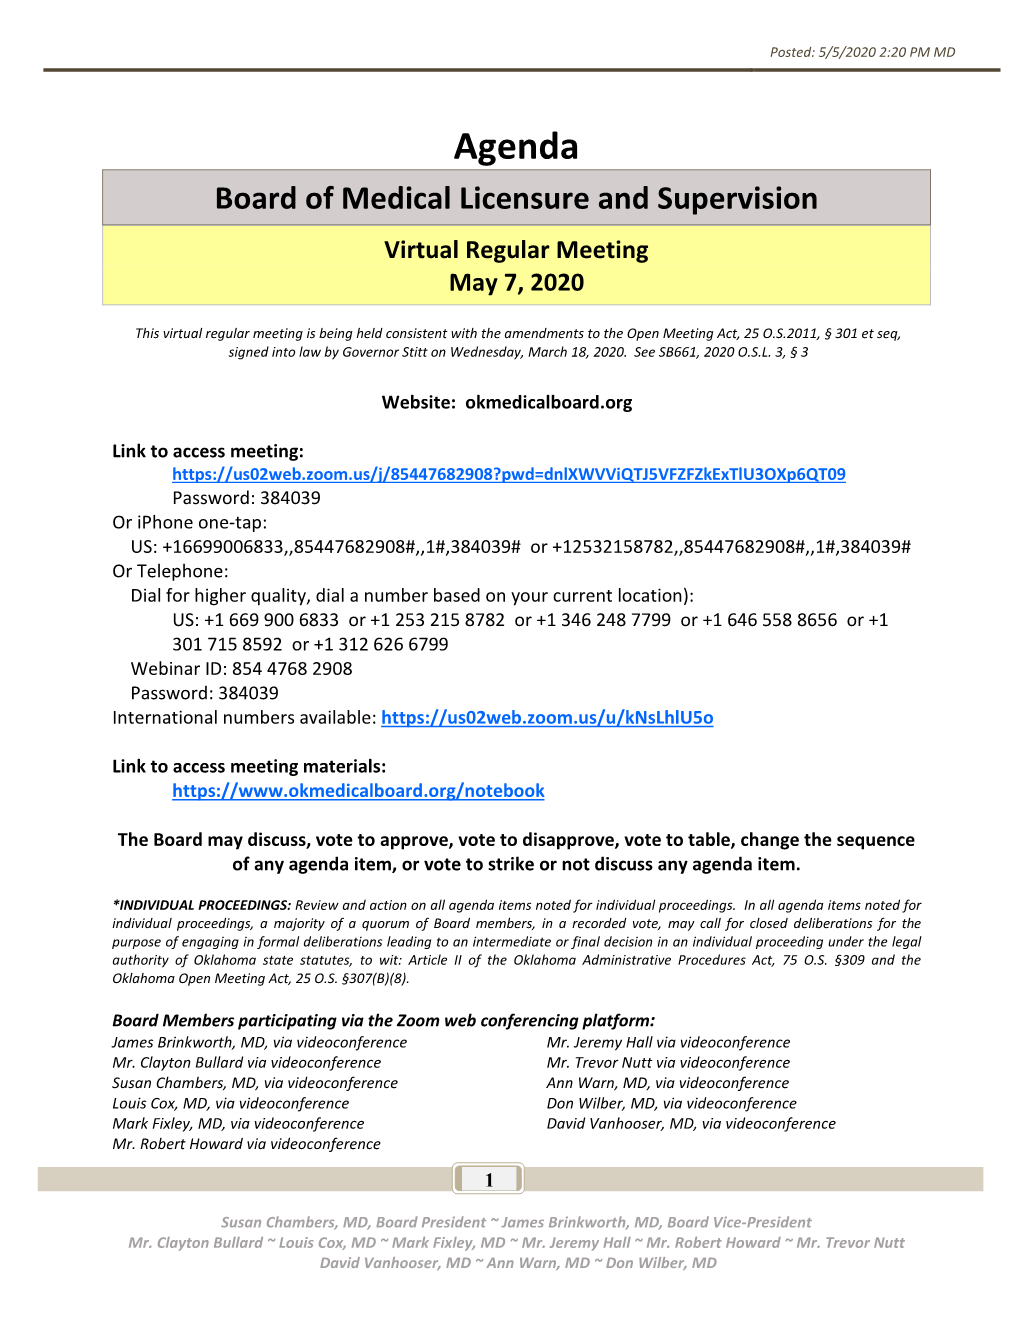 Agenda Board of Medical Licensure and Supervision Virtual Regular Meeting May 7, 2020